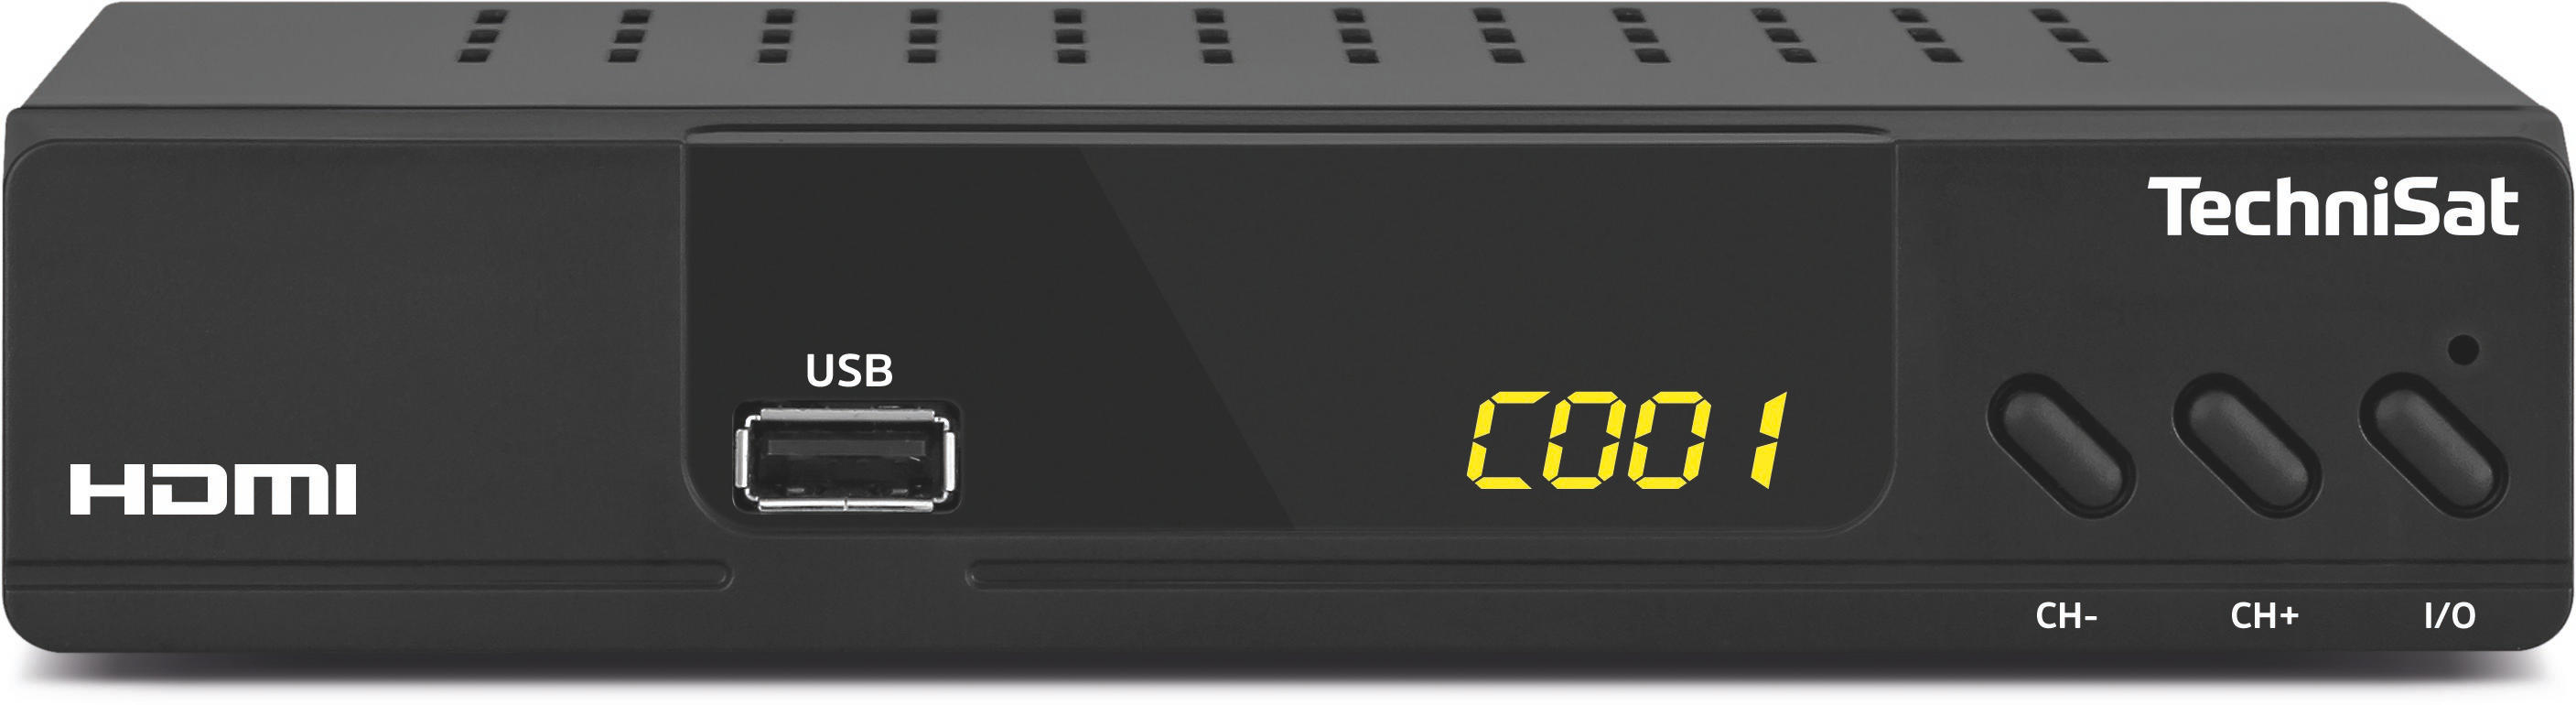 HDTV Schwarz) 232 (DVB-C, TECHNISAT Receiver DVB-C2, HD-C